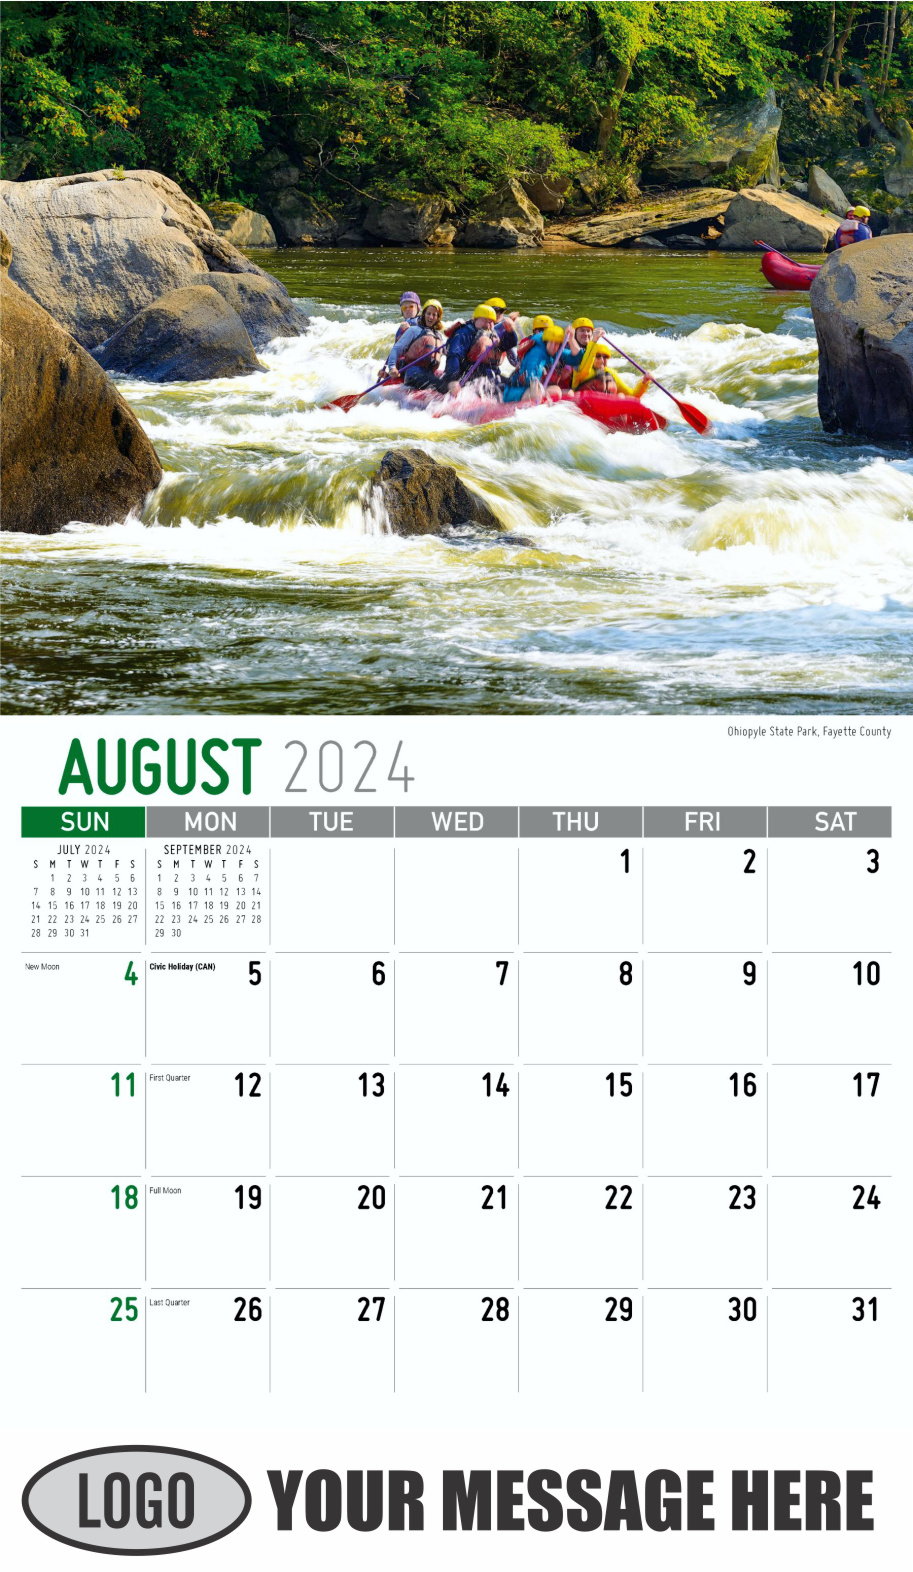 Scenes of Pennsylvania 2024 Business Promotion Calendar - August